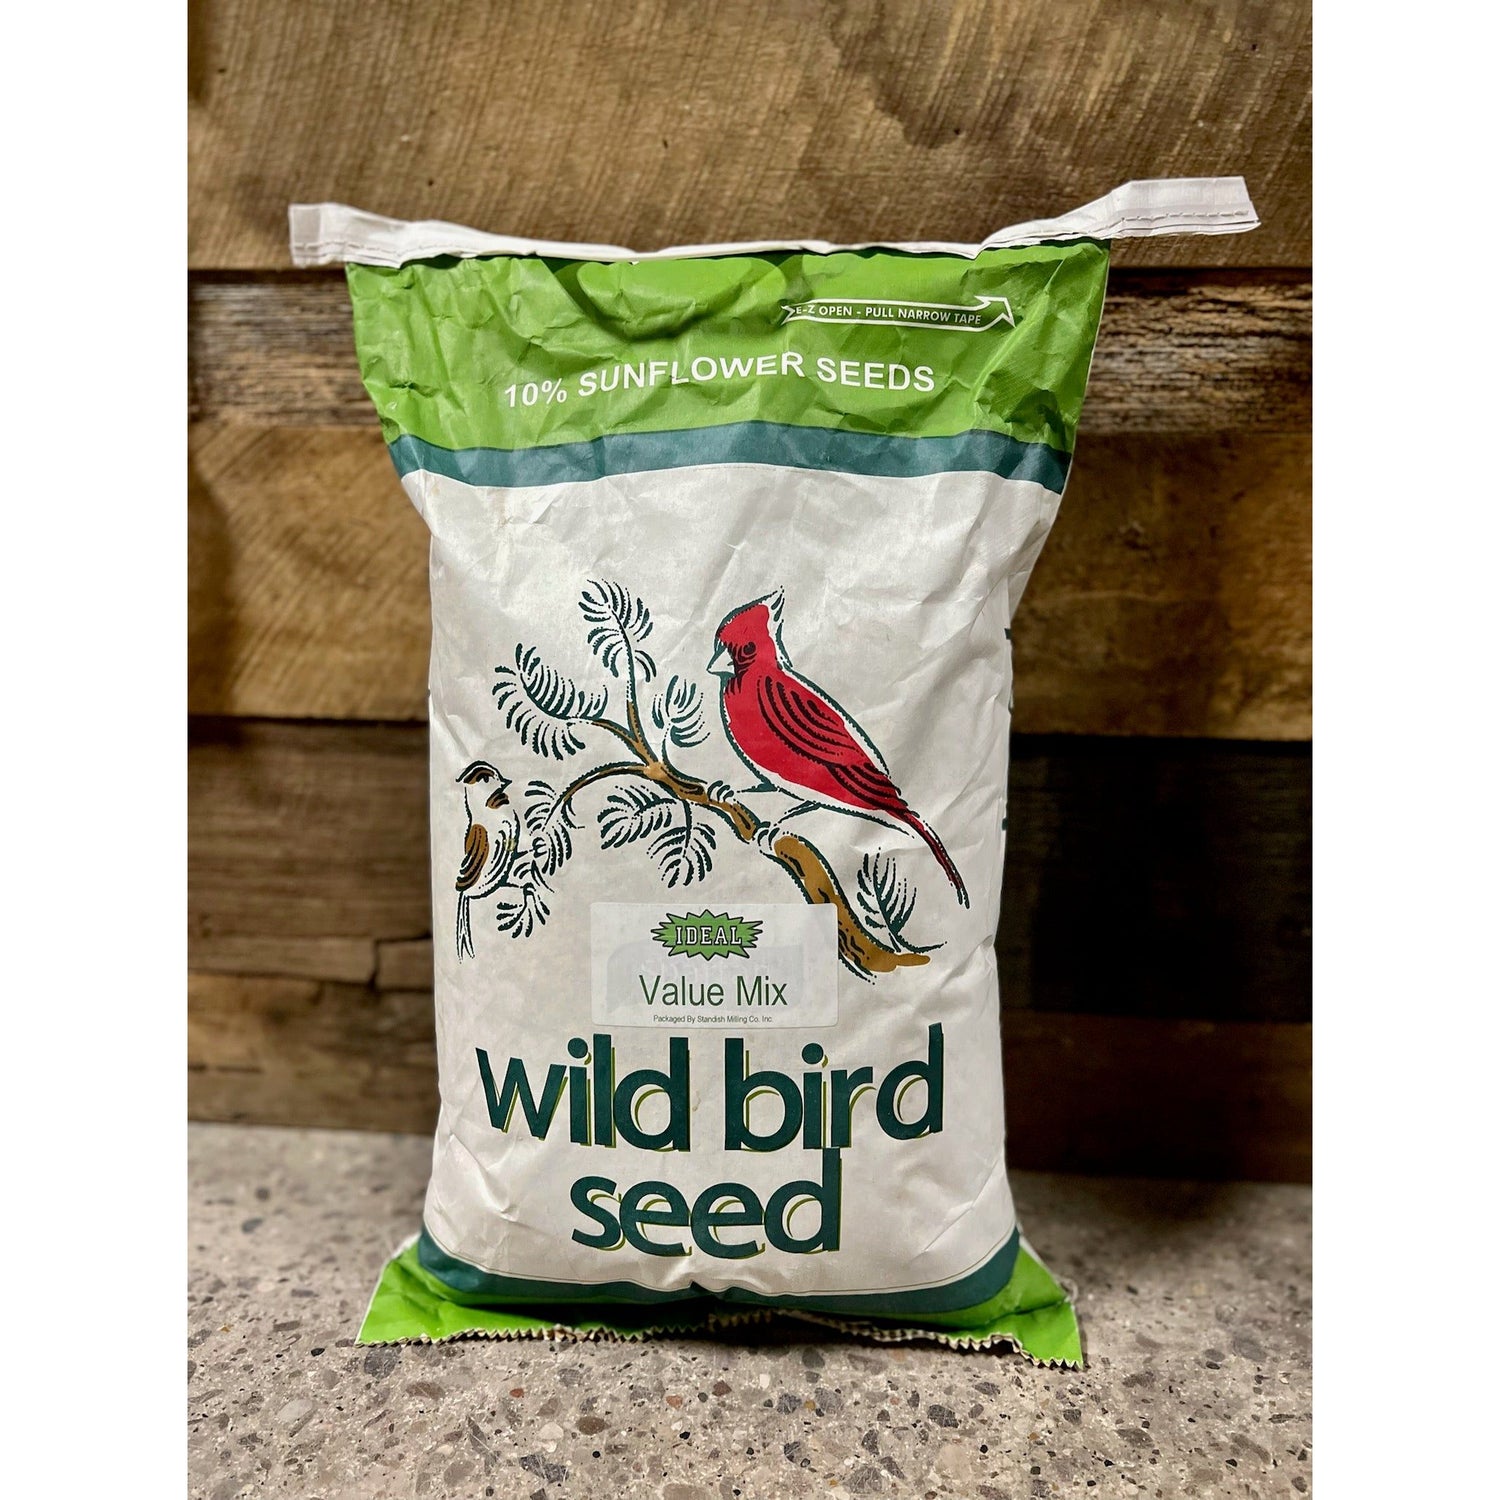 Premium Wild Bird Mix –